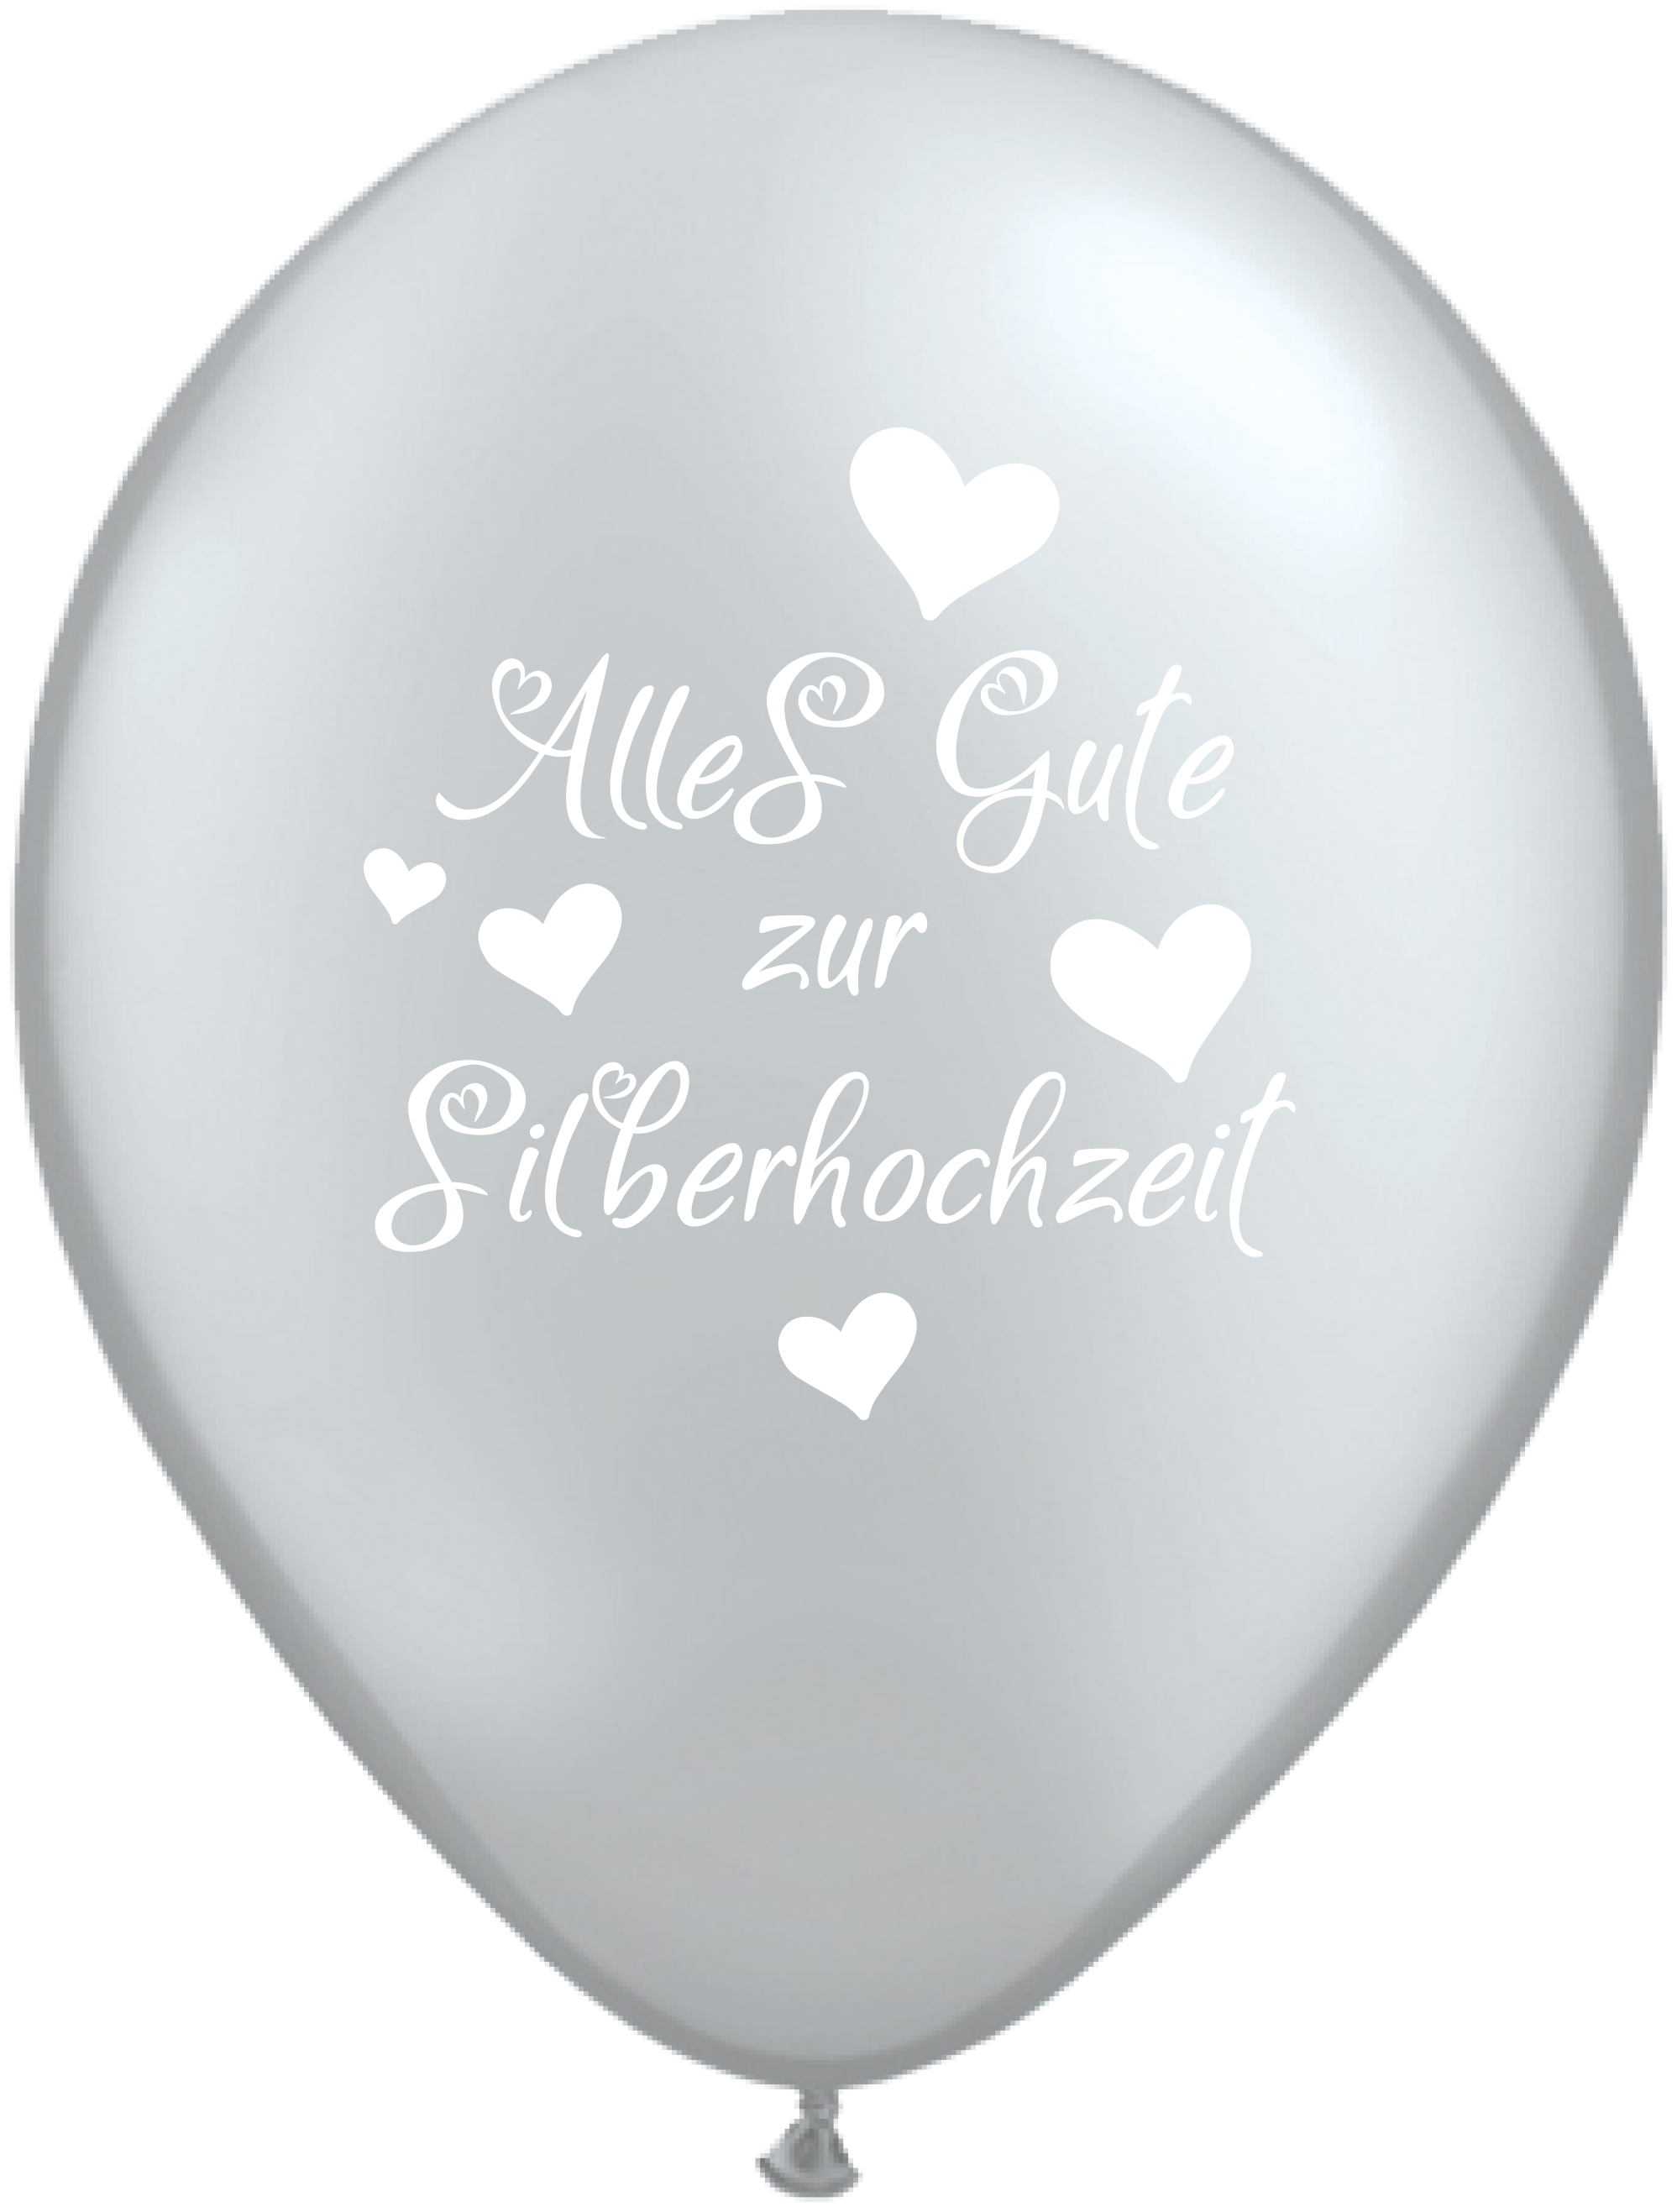 11" Silberhochzeit Silber (Retail Pack)